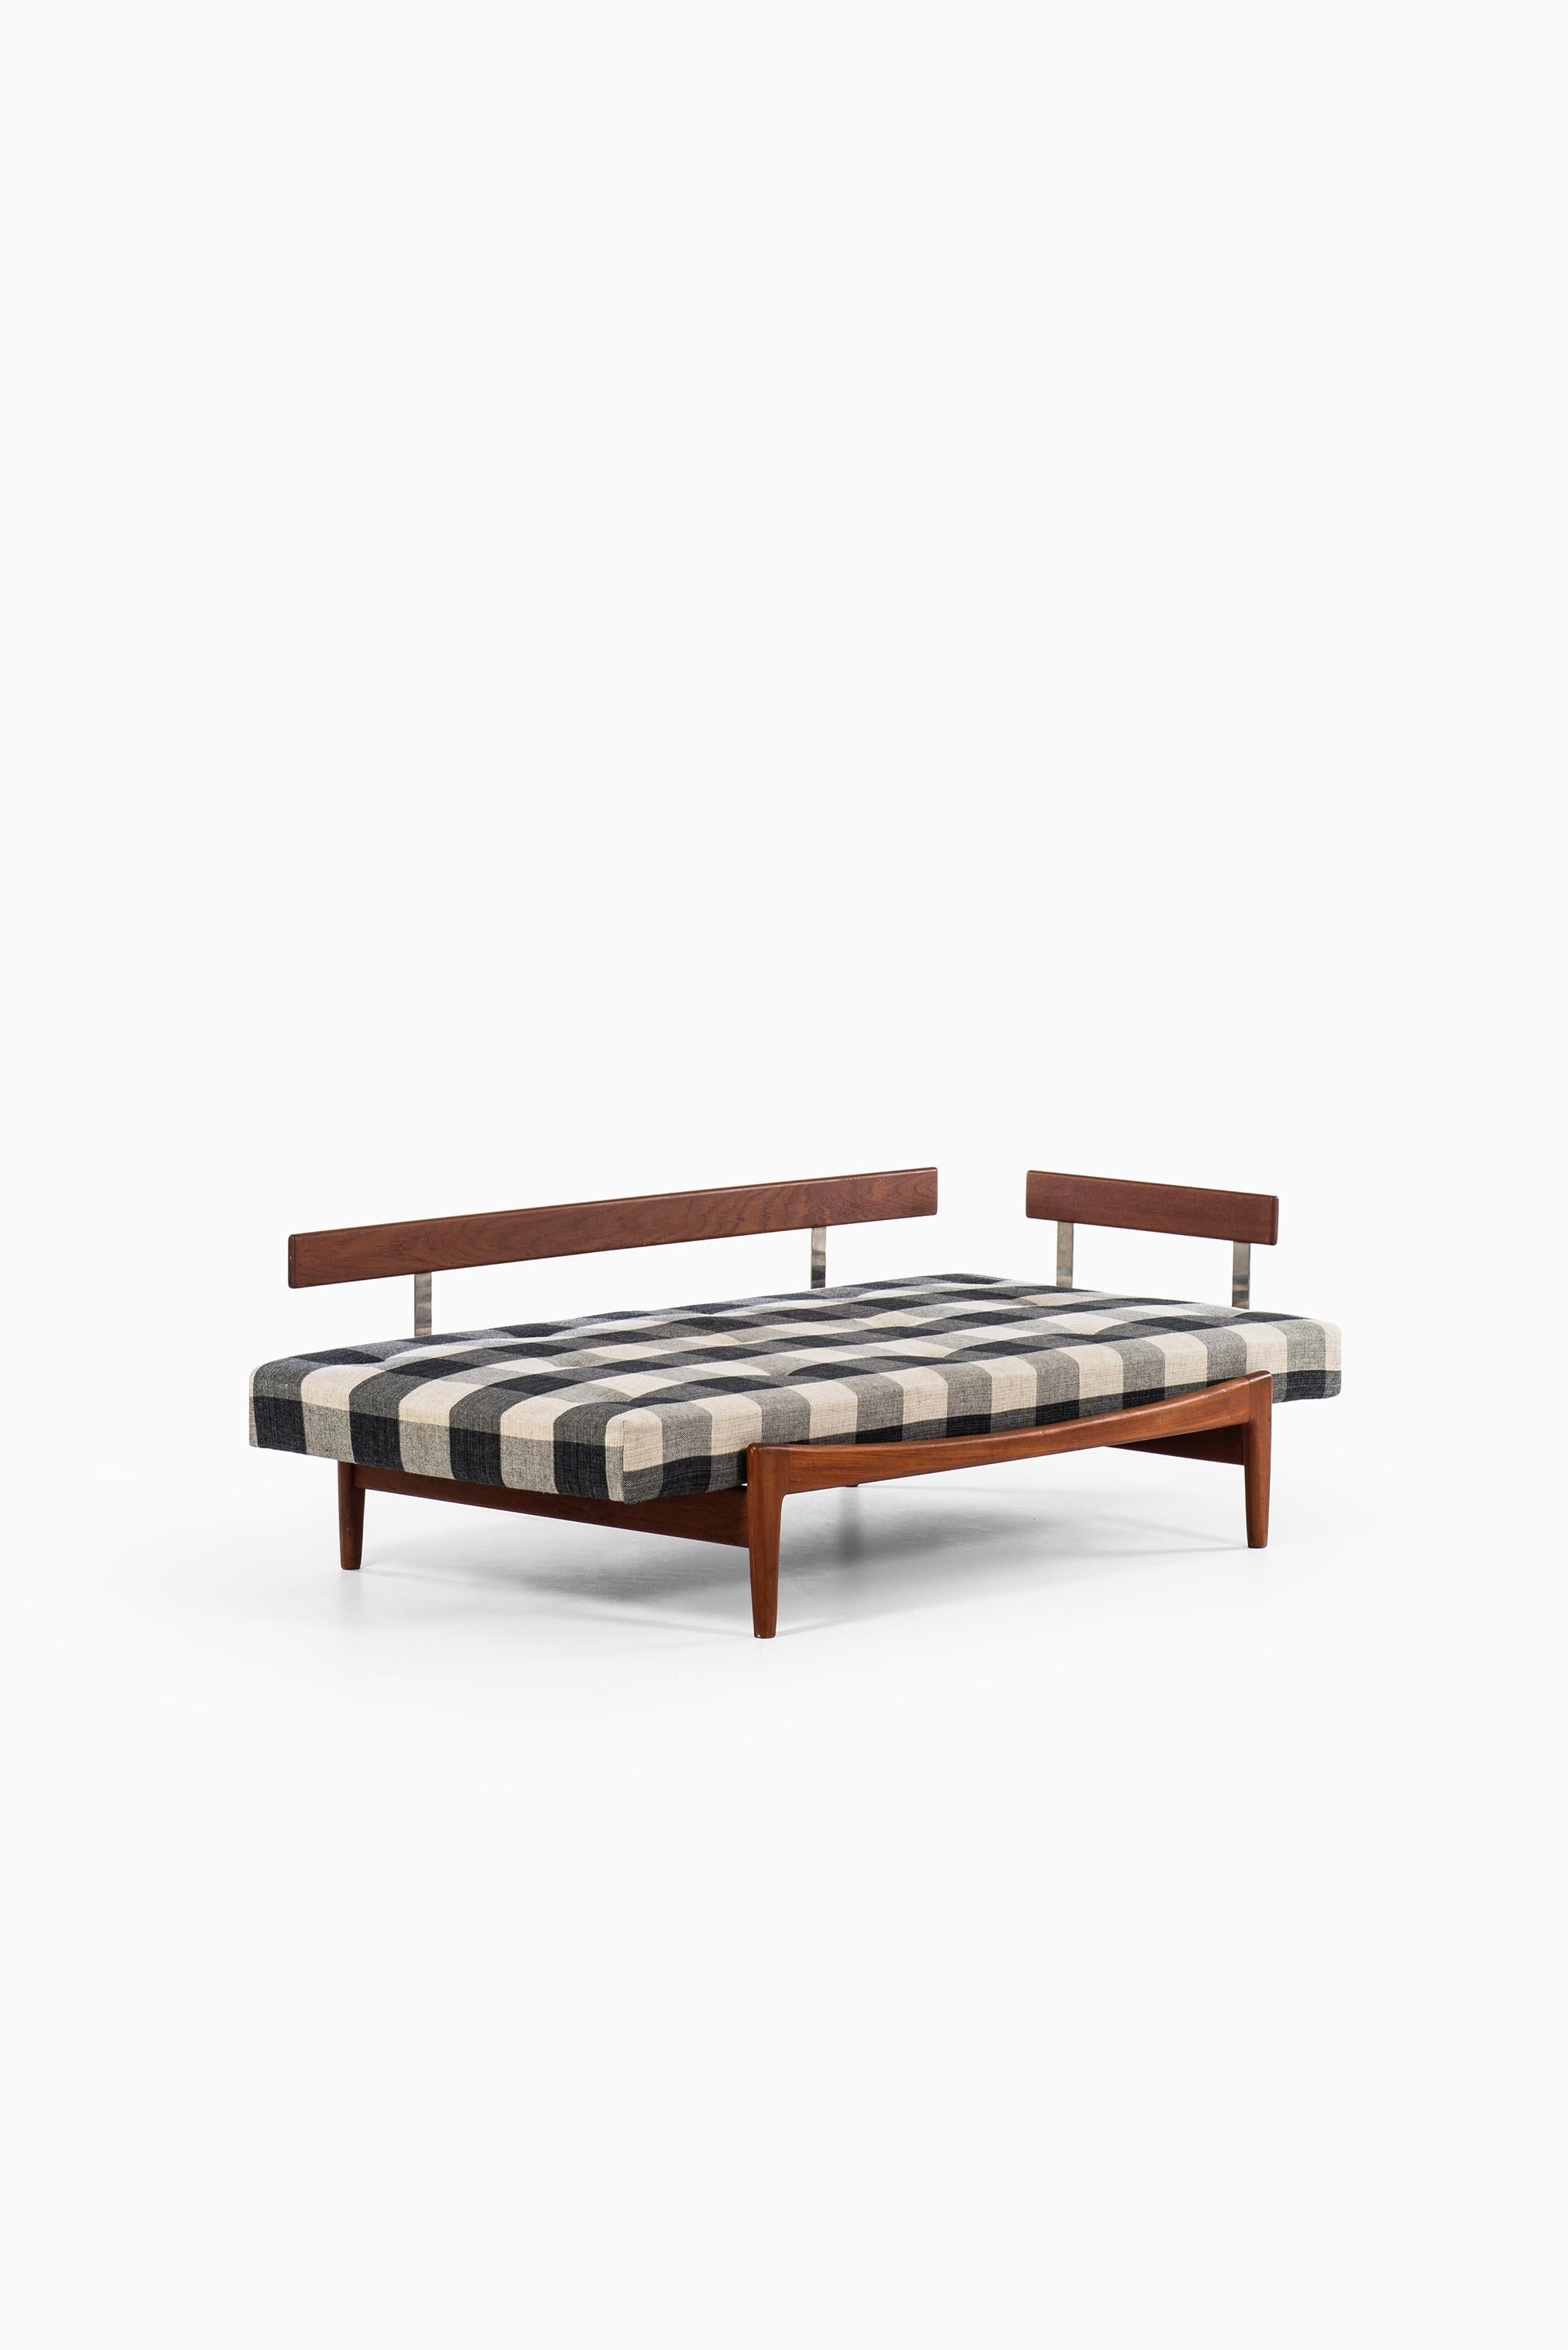 Ib Kofod-Larsen Sofa / Daybed by Seffle Möbelfabrik in Sweden 1